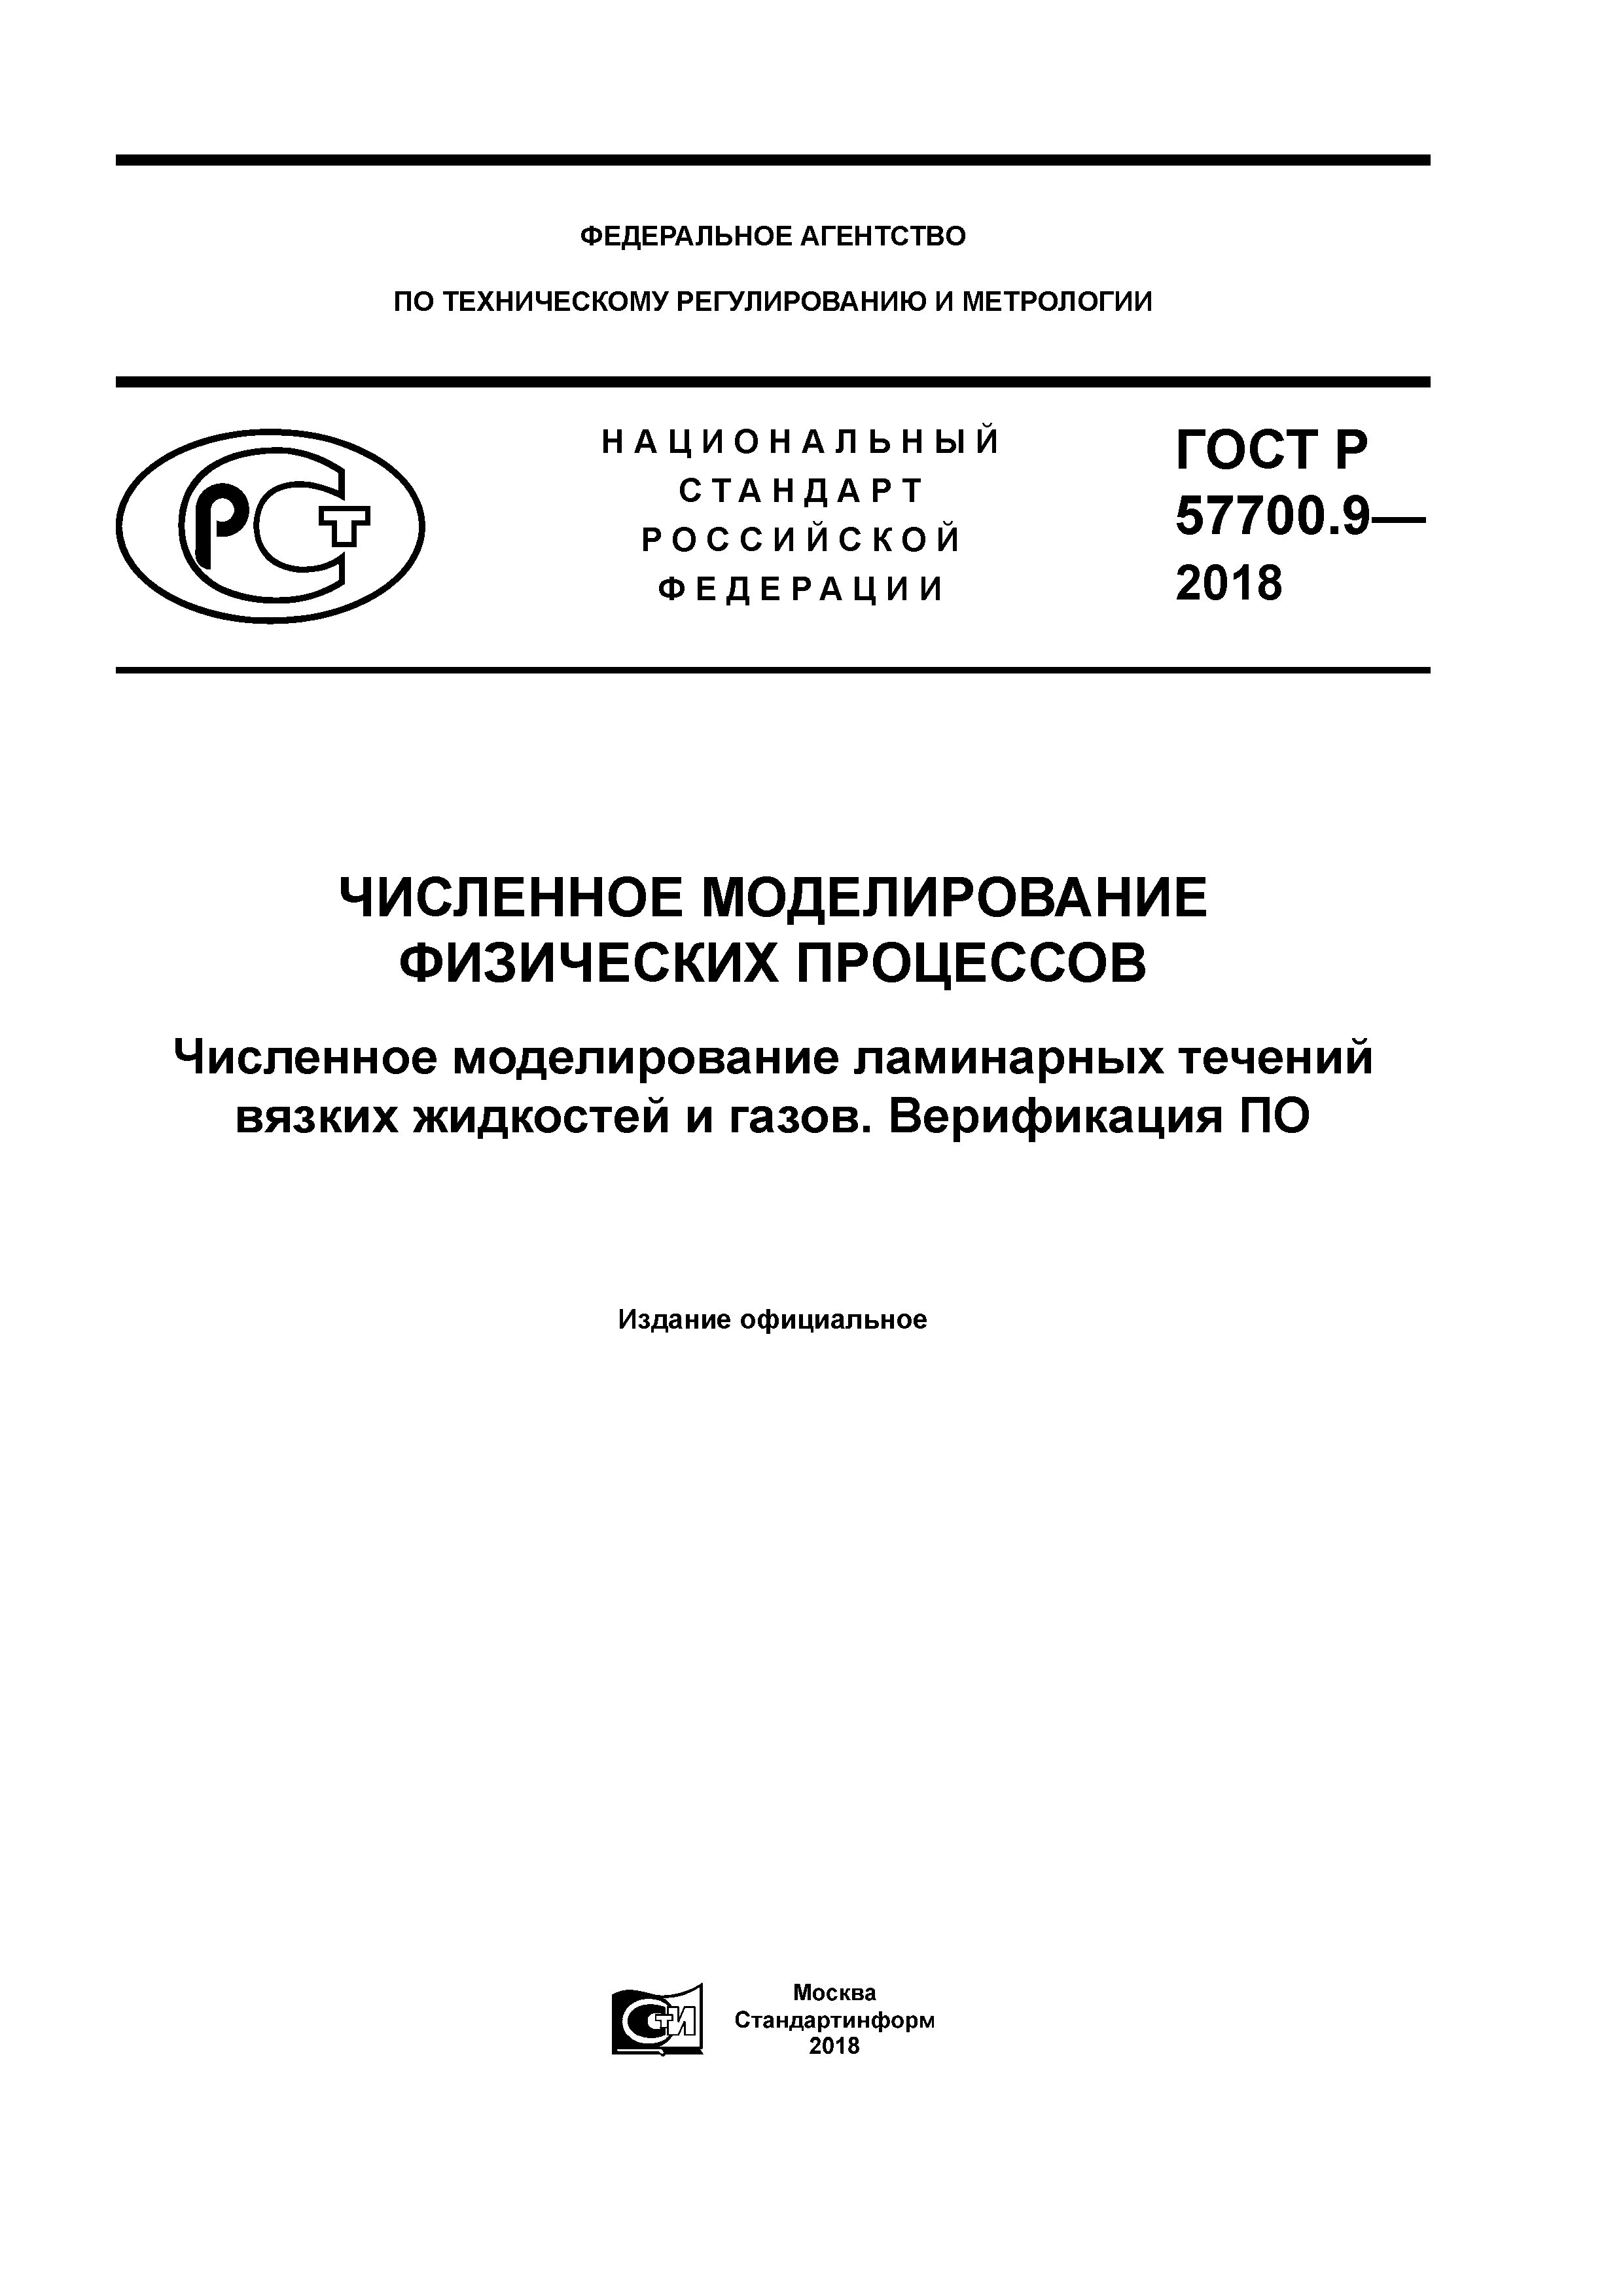 ГОСТ Р 57700.9-2018